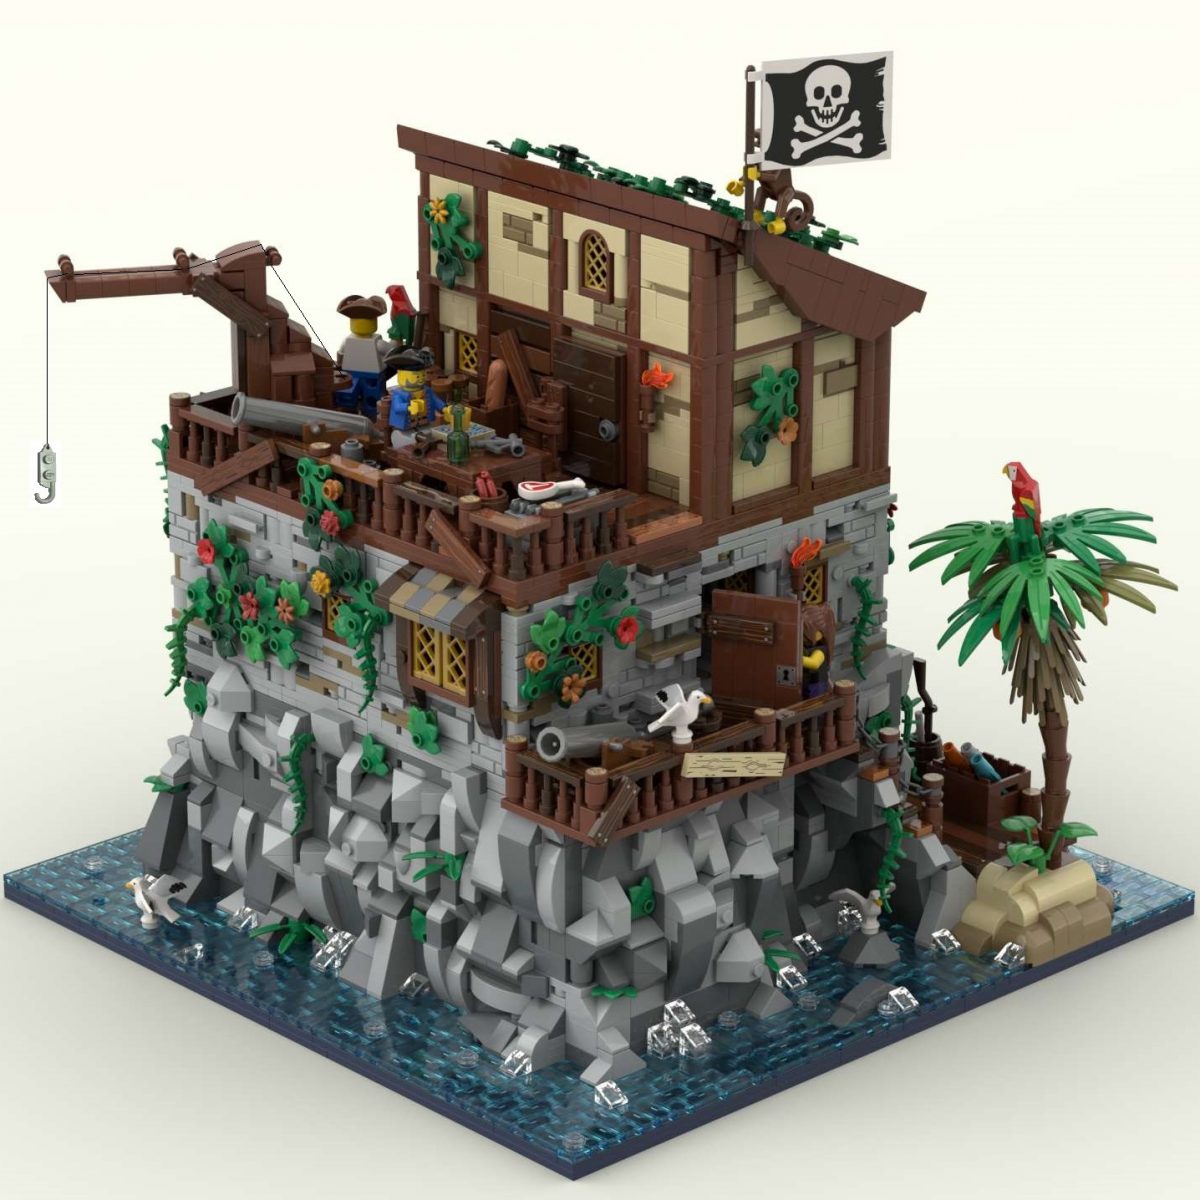 The Redbeard's House” by Cincinnati – MOCs – The home of LEGO® Pirates